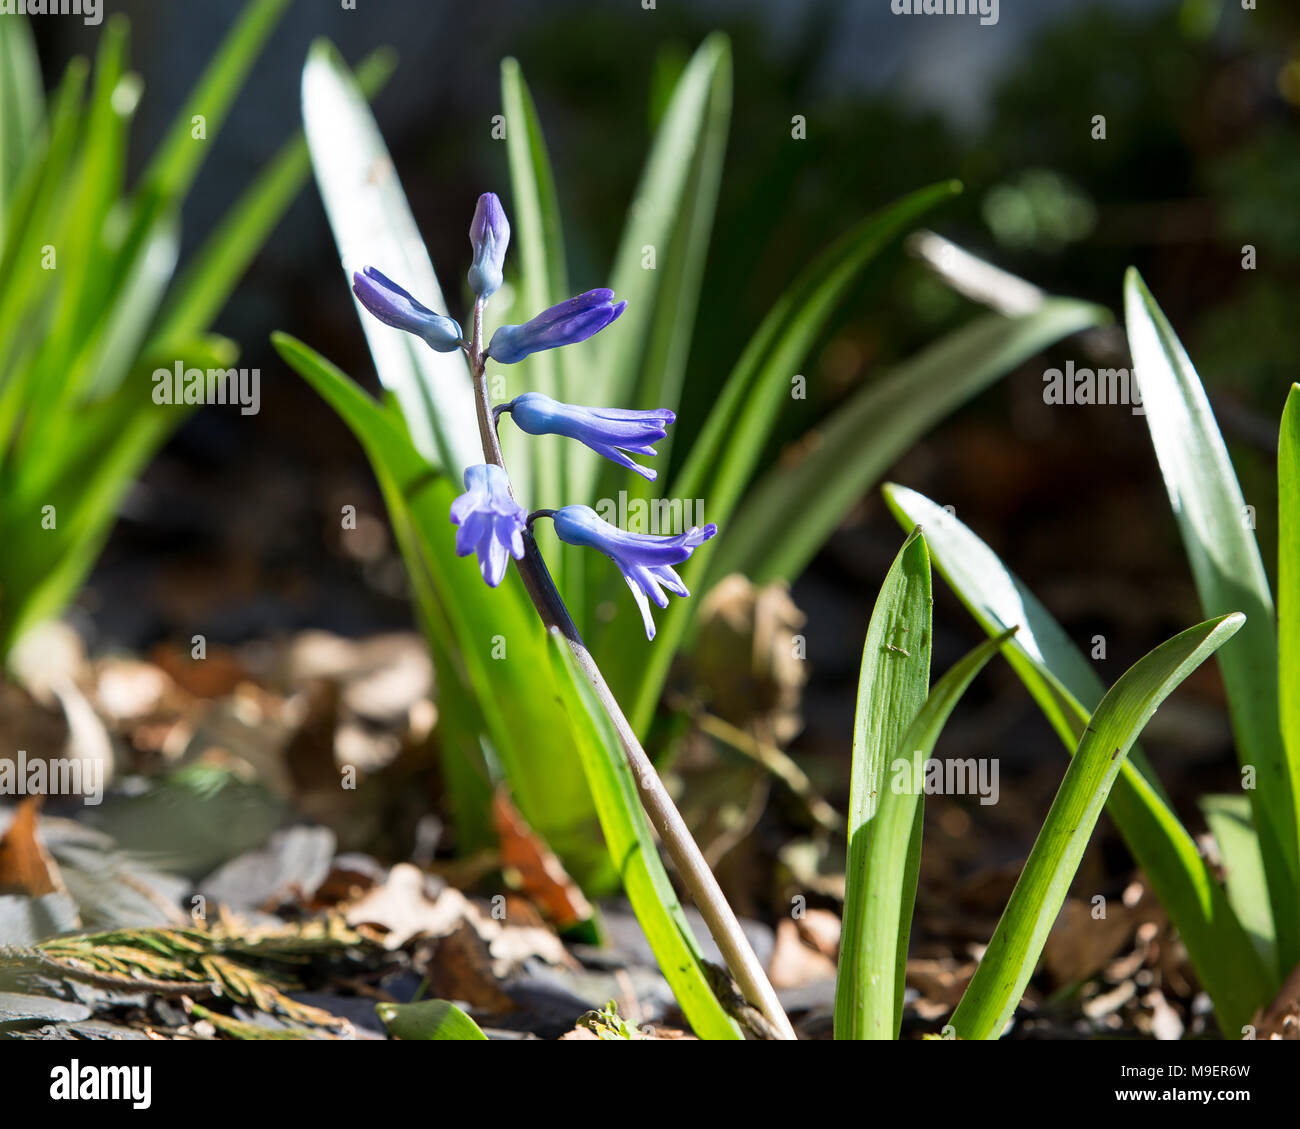 Bluebell común Hyacinthoides non-scripta. Un común bluebell floración en un jardín durante la primavera en el REINO UNIDO Foto de stock